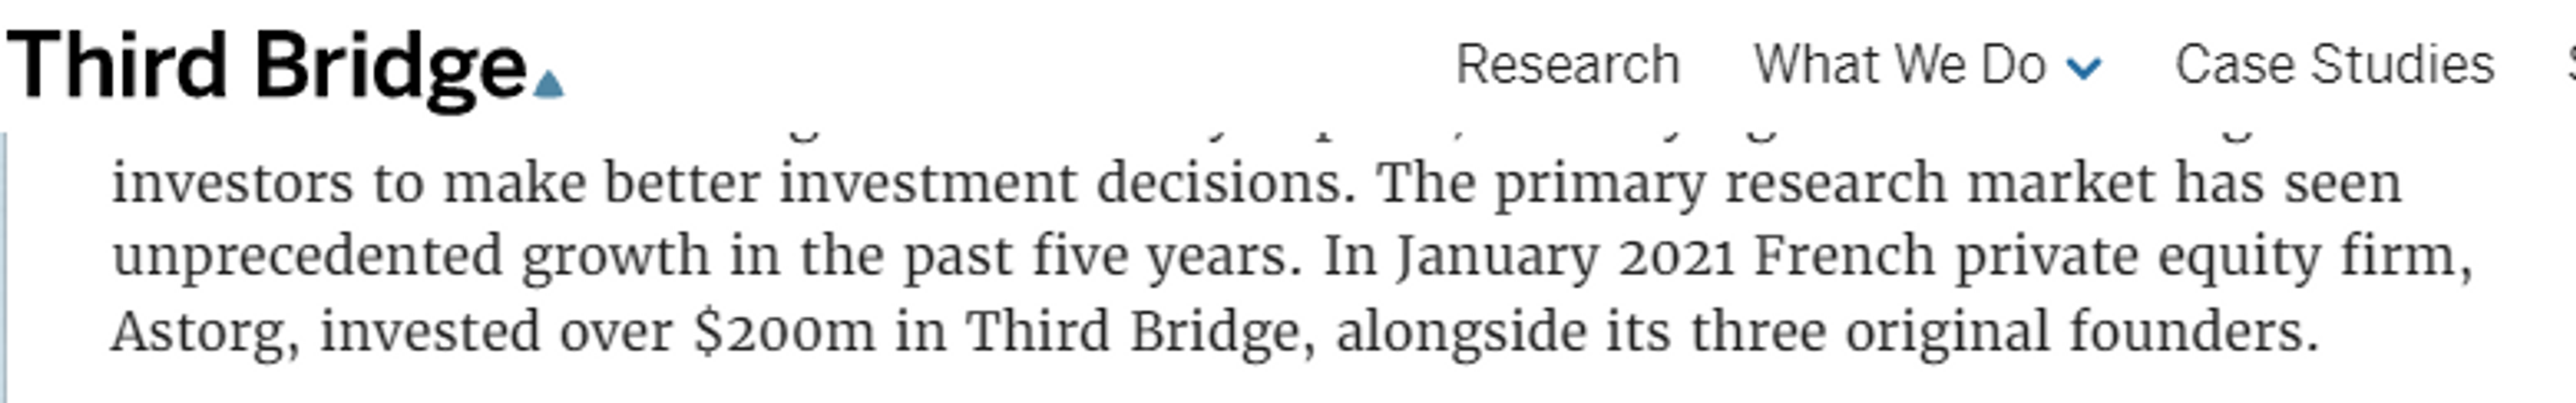 Excerpt from a Third Bridge press release on 31 Jan 2022